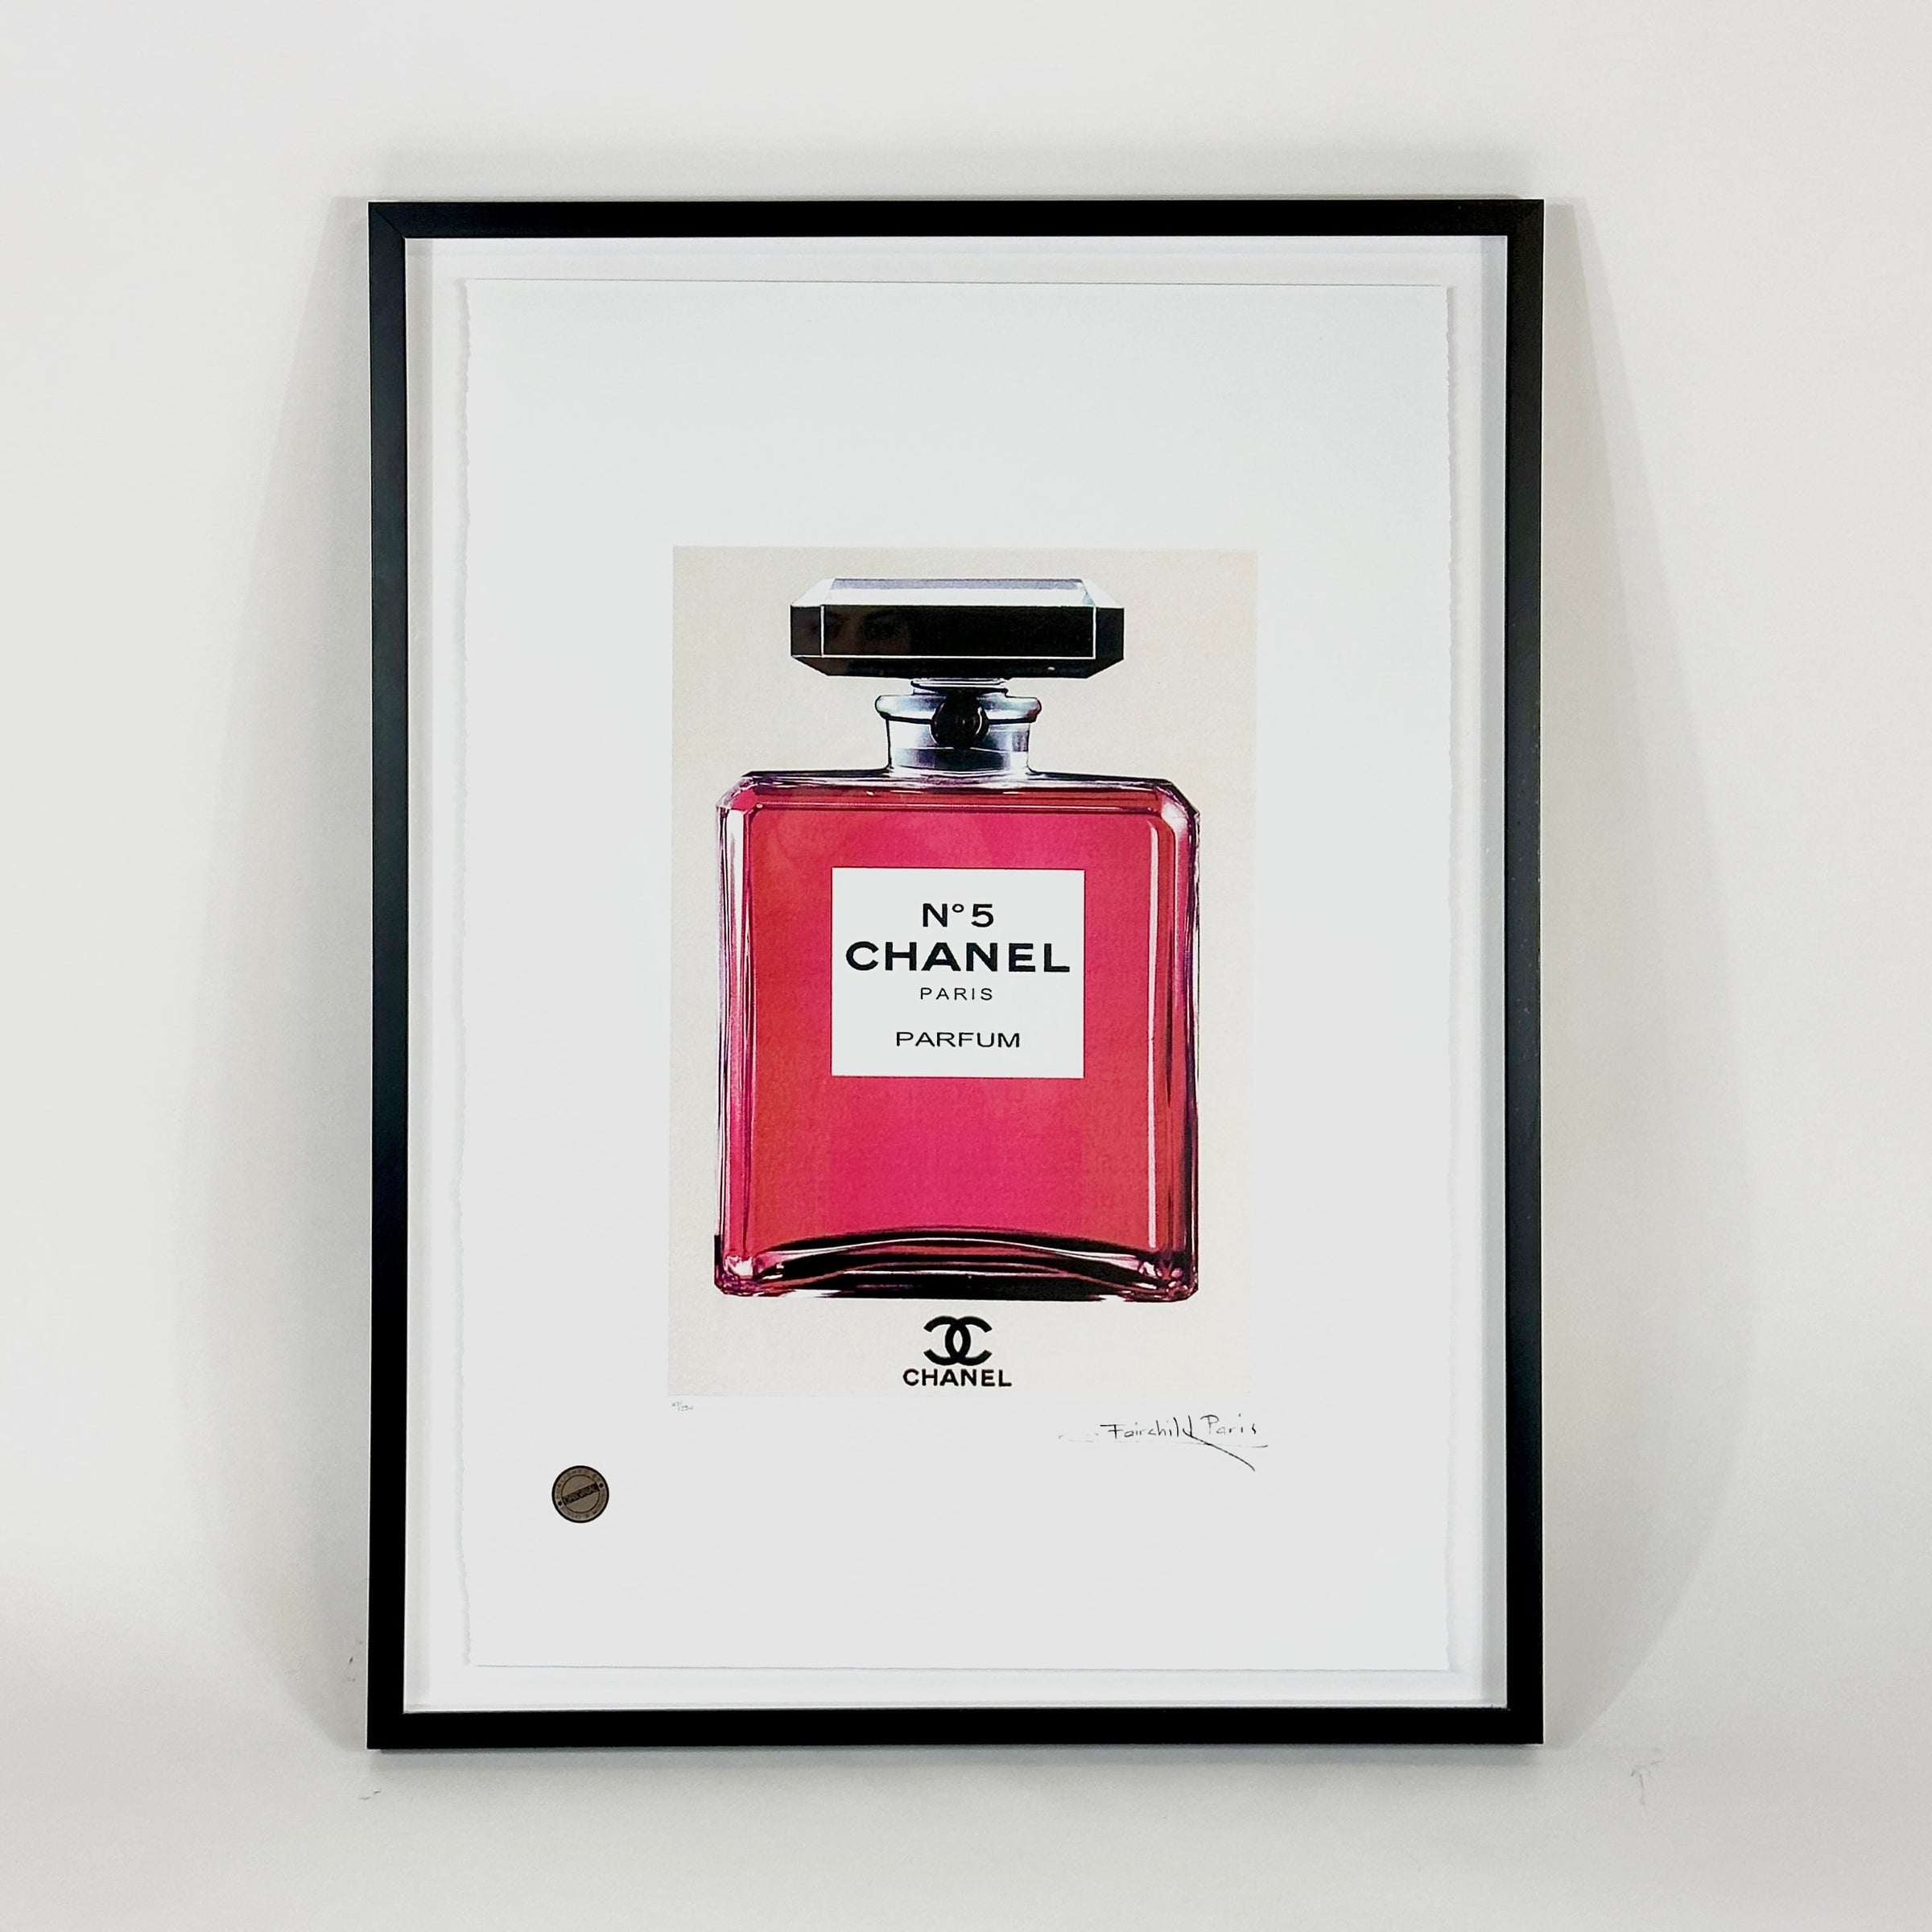 Chanel 5 Wall Art Original Vintage Print Perfume Bottle 